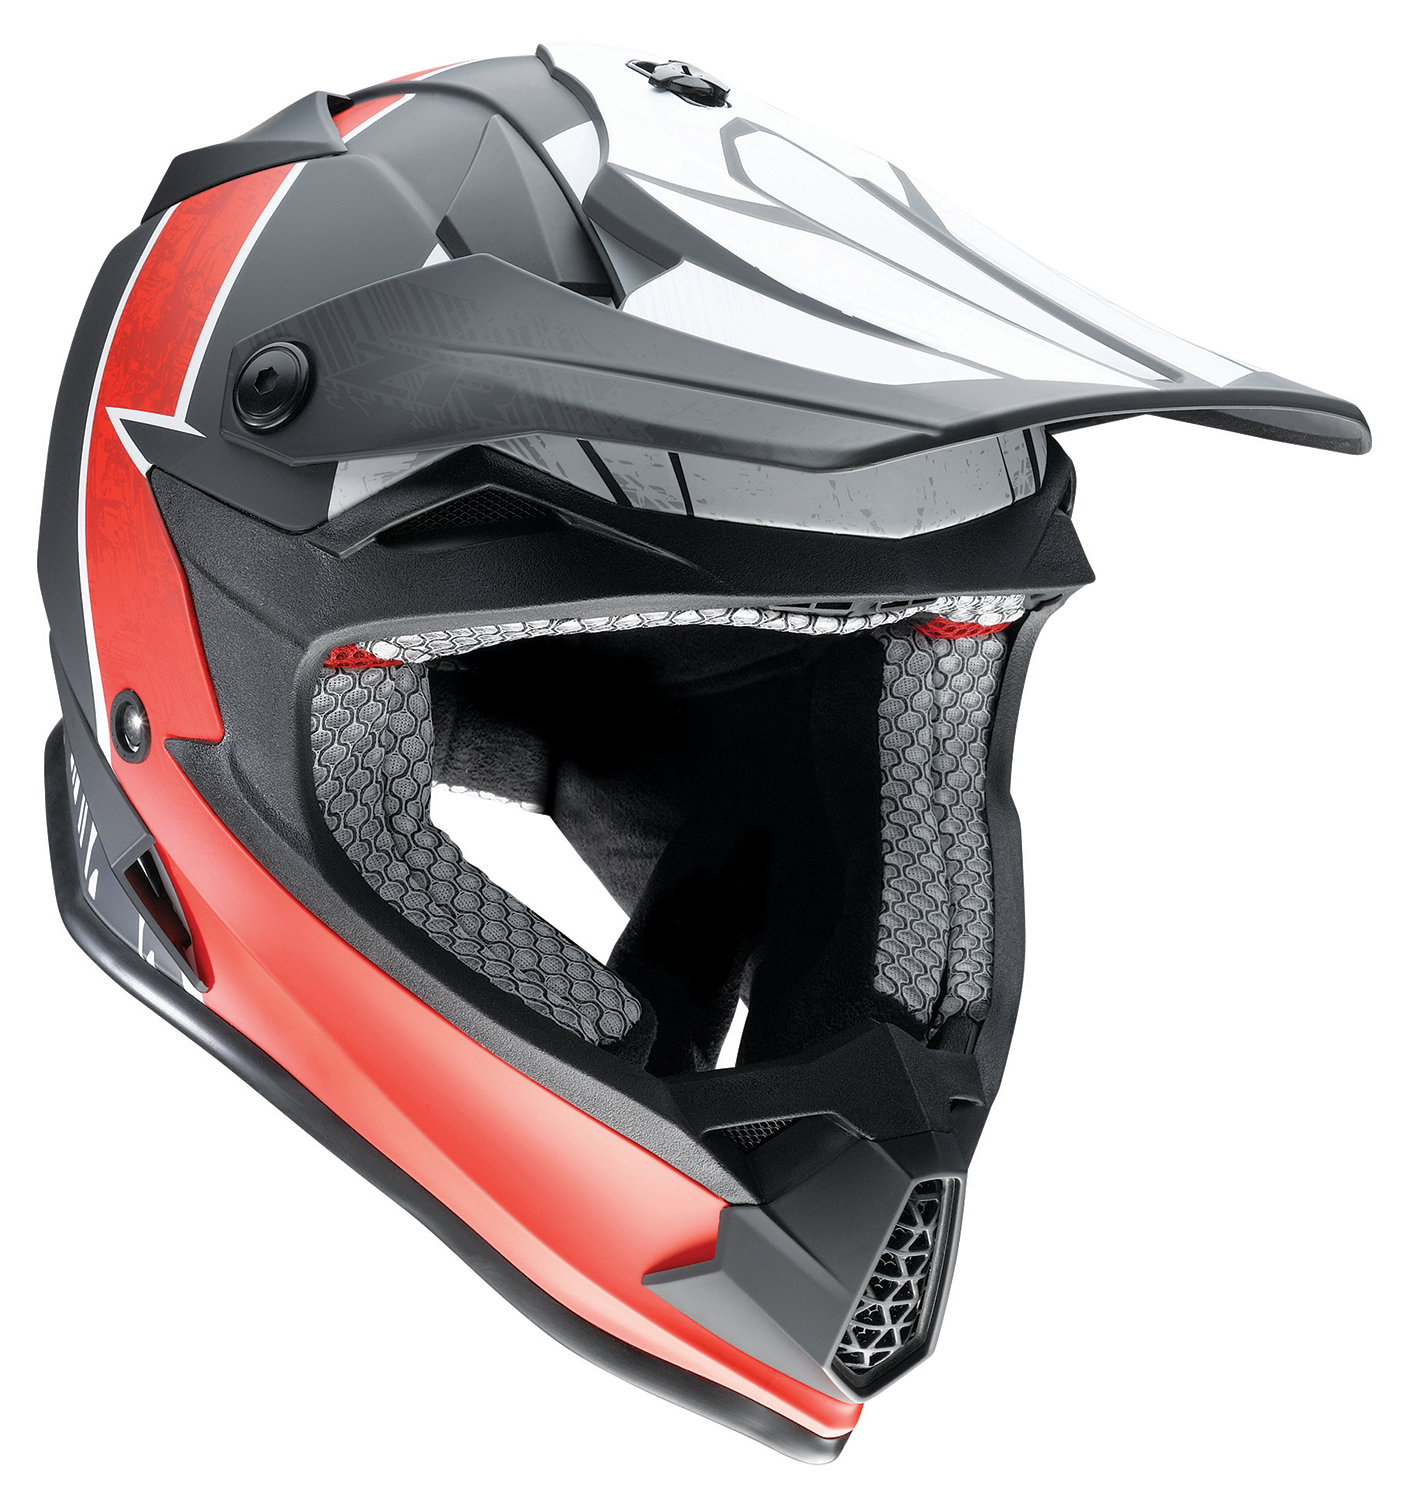 Z1R Youth F.I. Helmet - Fractal - MIPS? - Matte Black/Red - Small 0111-1517